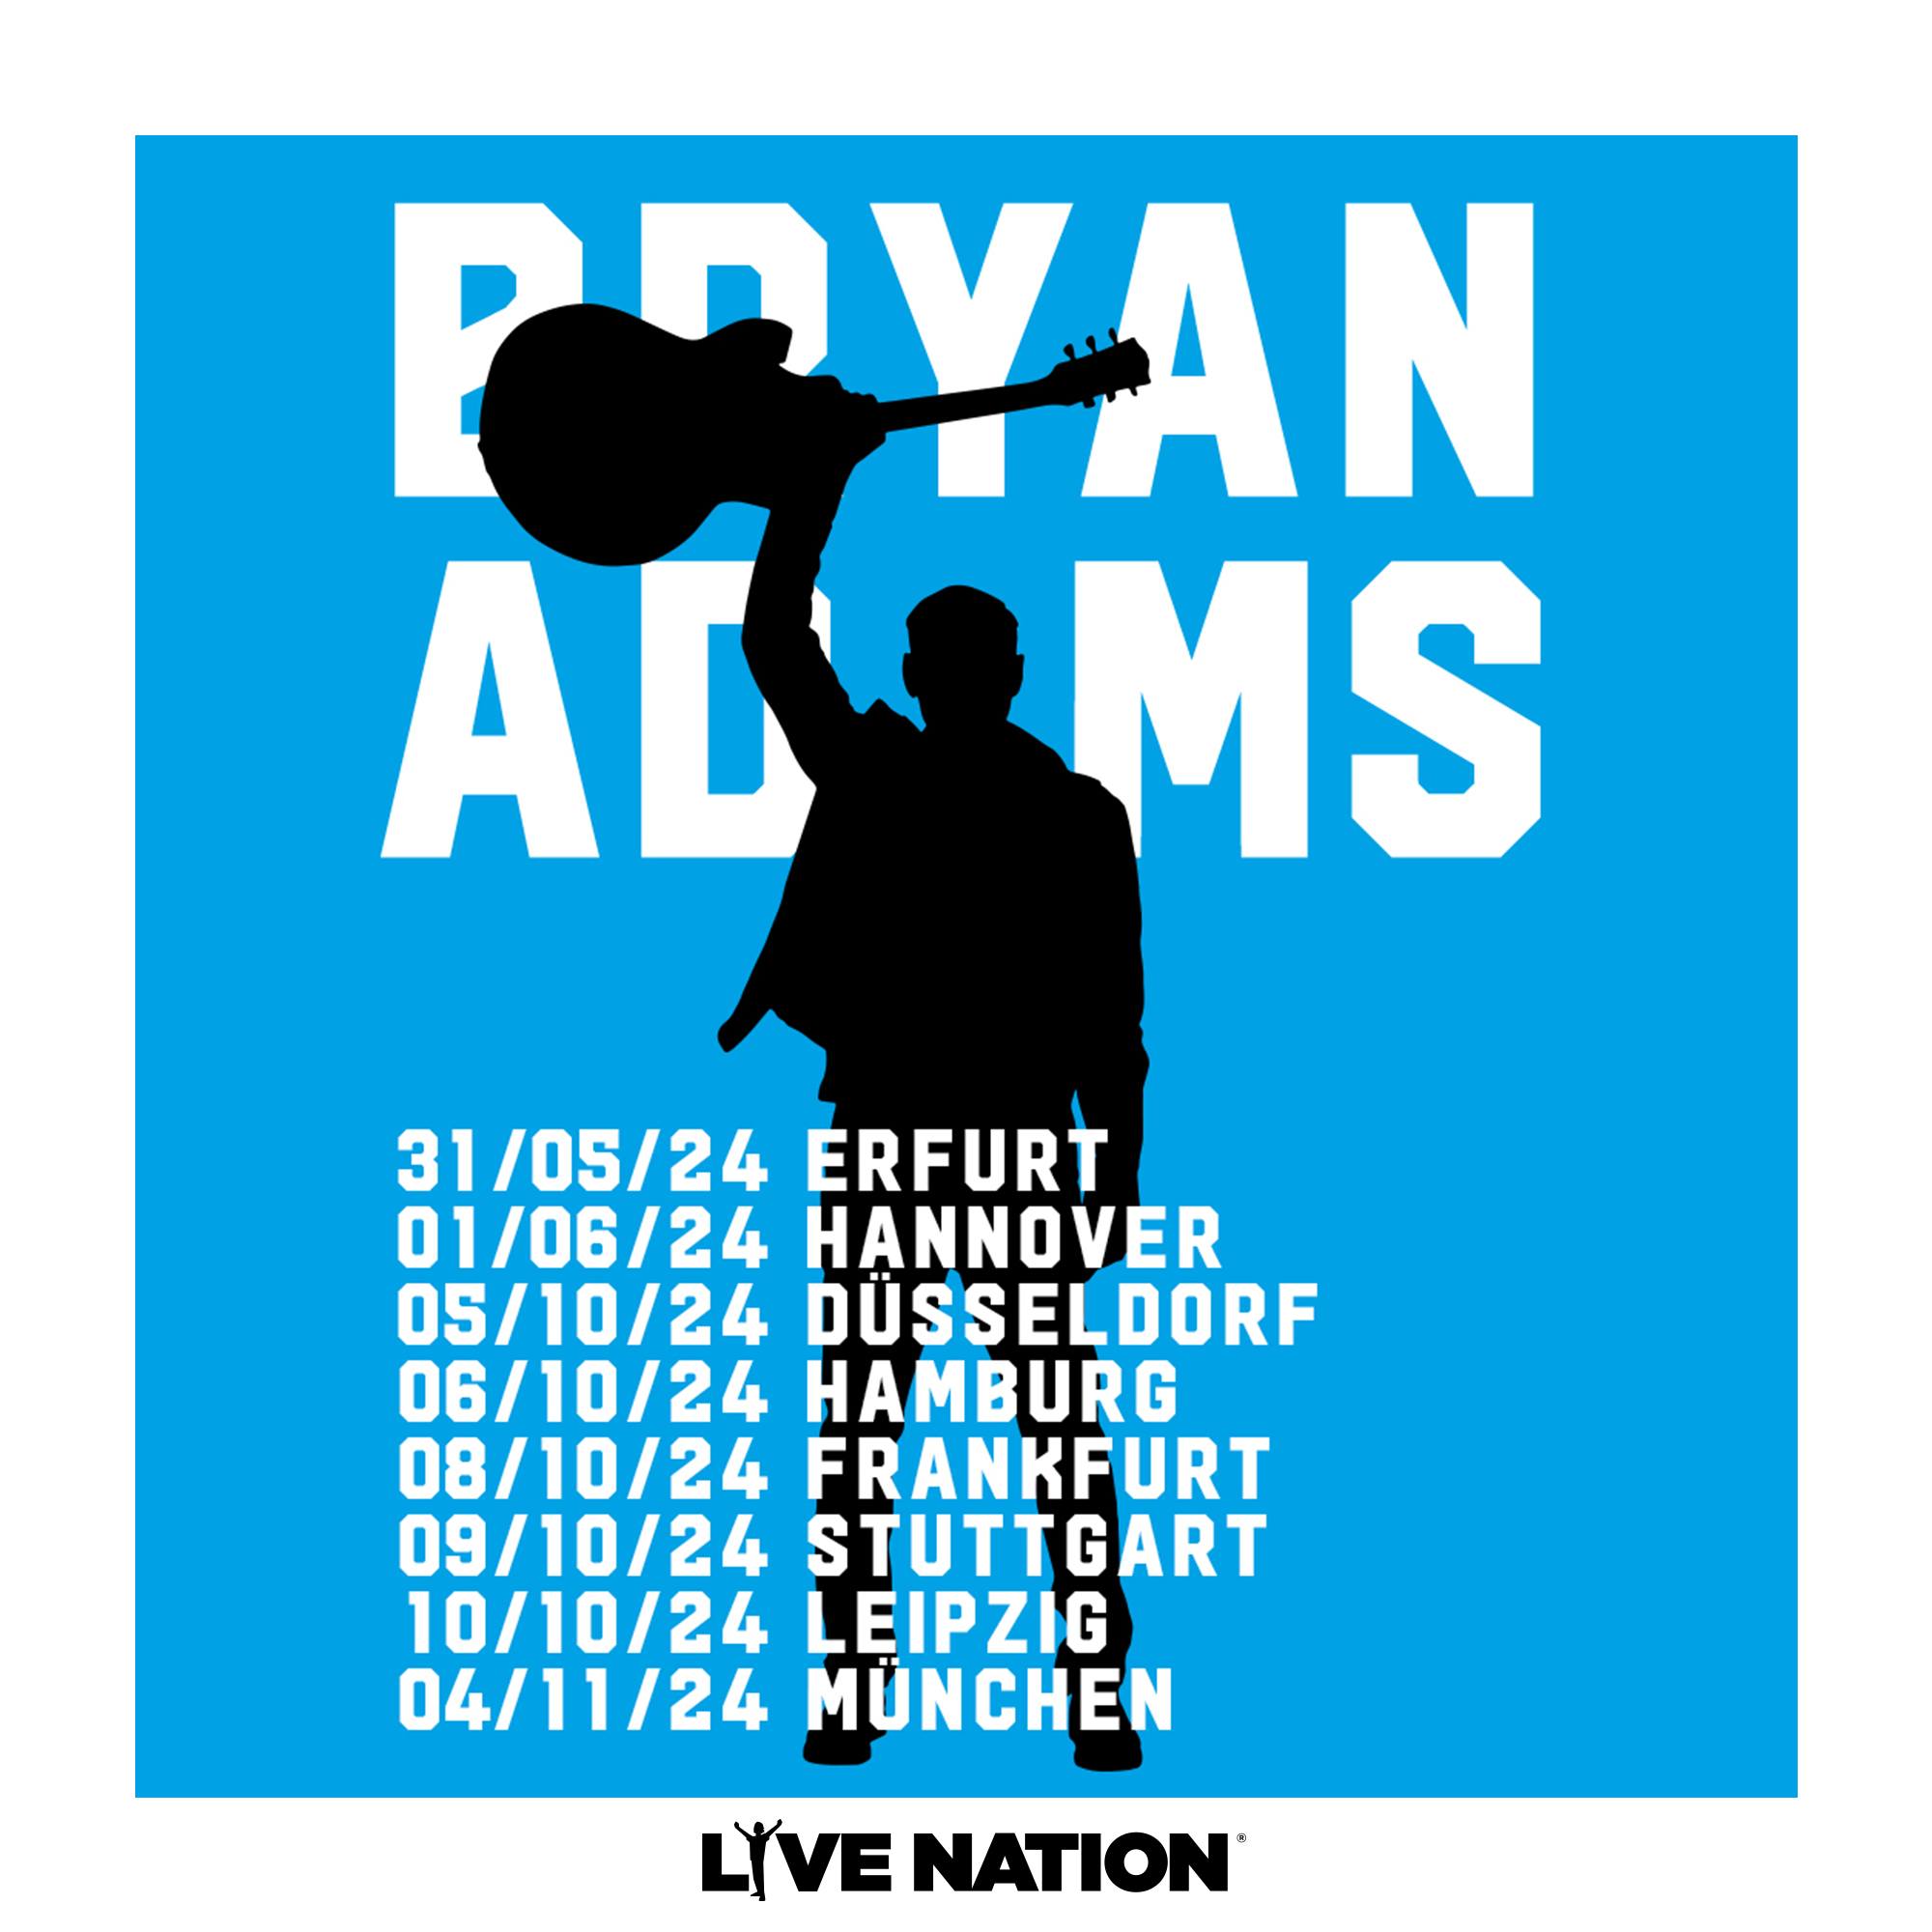 Bryan Adams at Quarterback Immobilien Arena Tickets